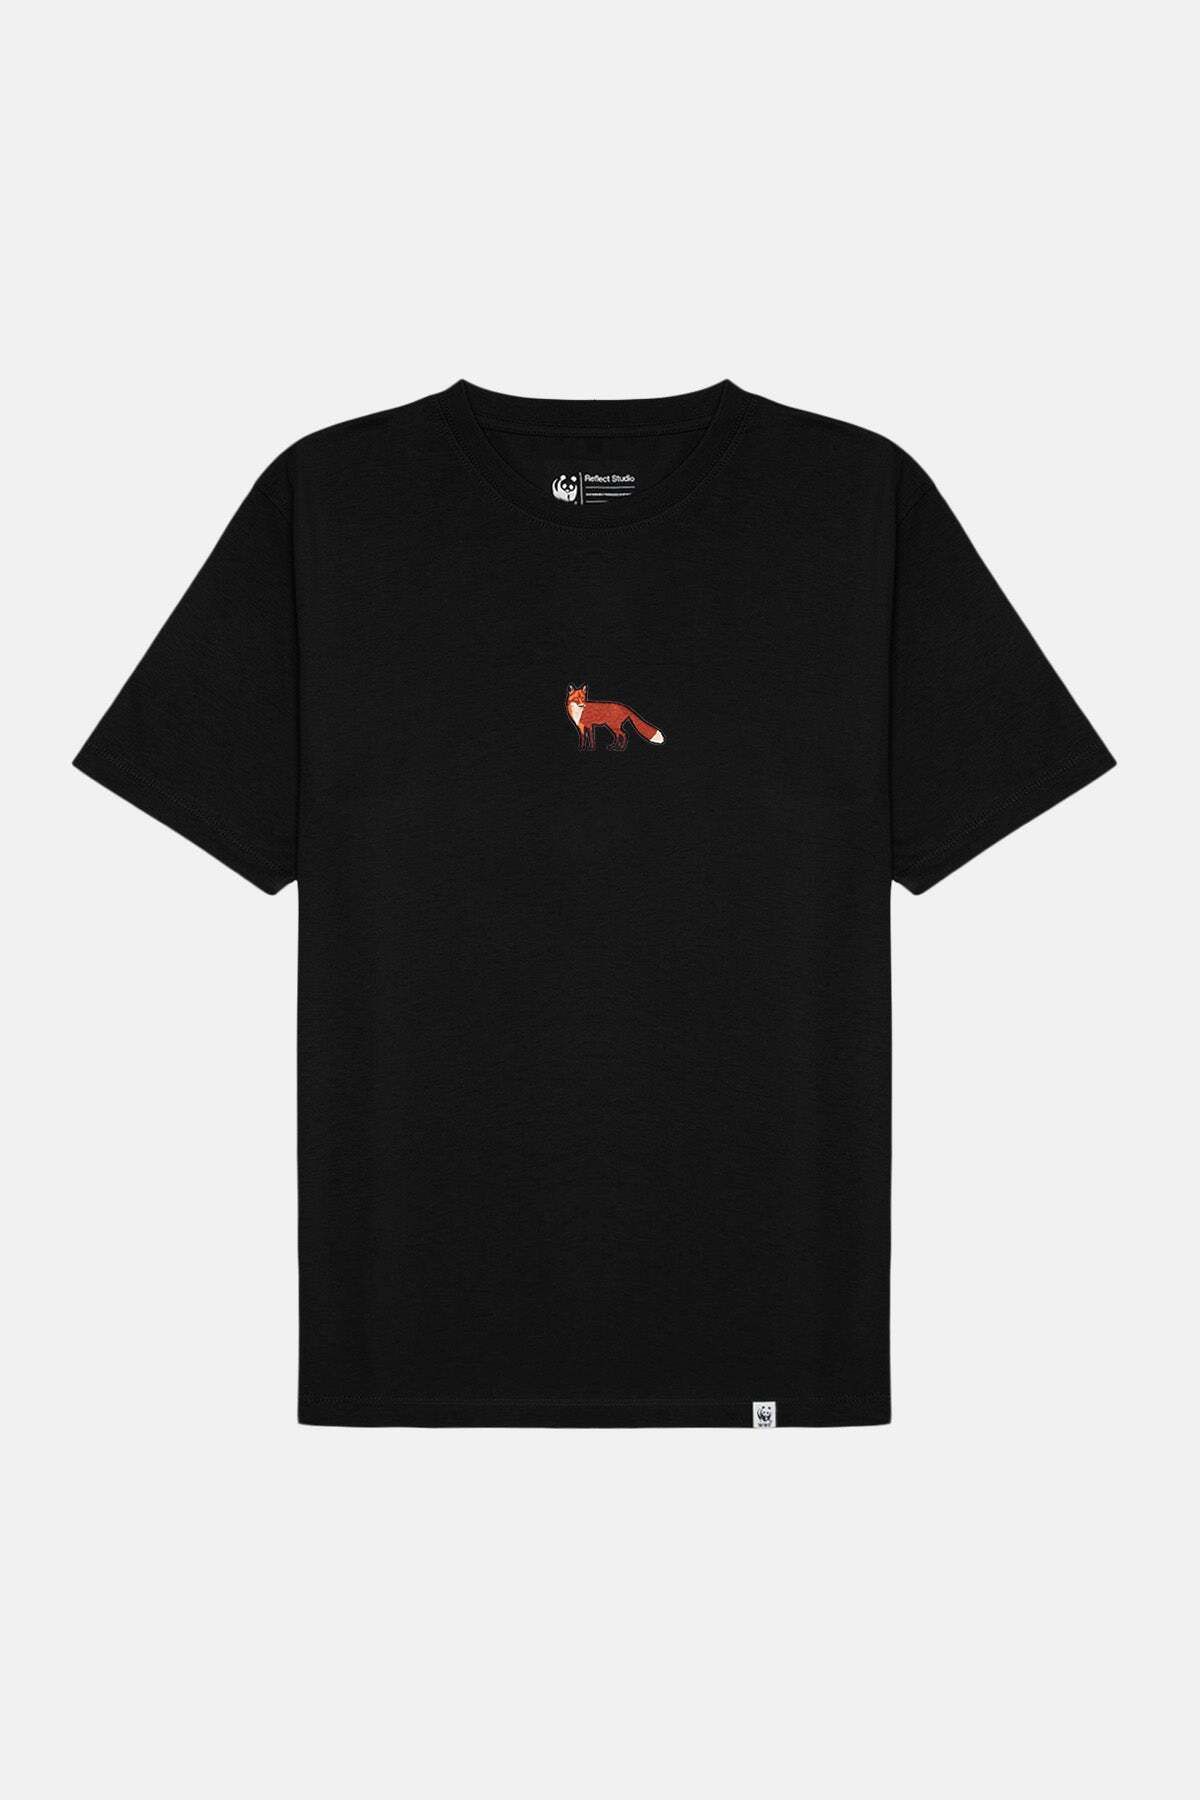 WWF Market Kızıl Tilki Soft T-Shirt - Siyah